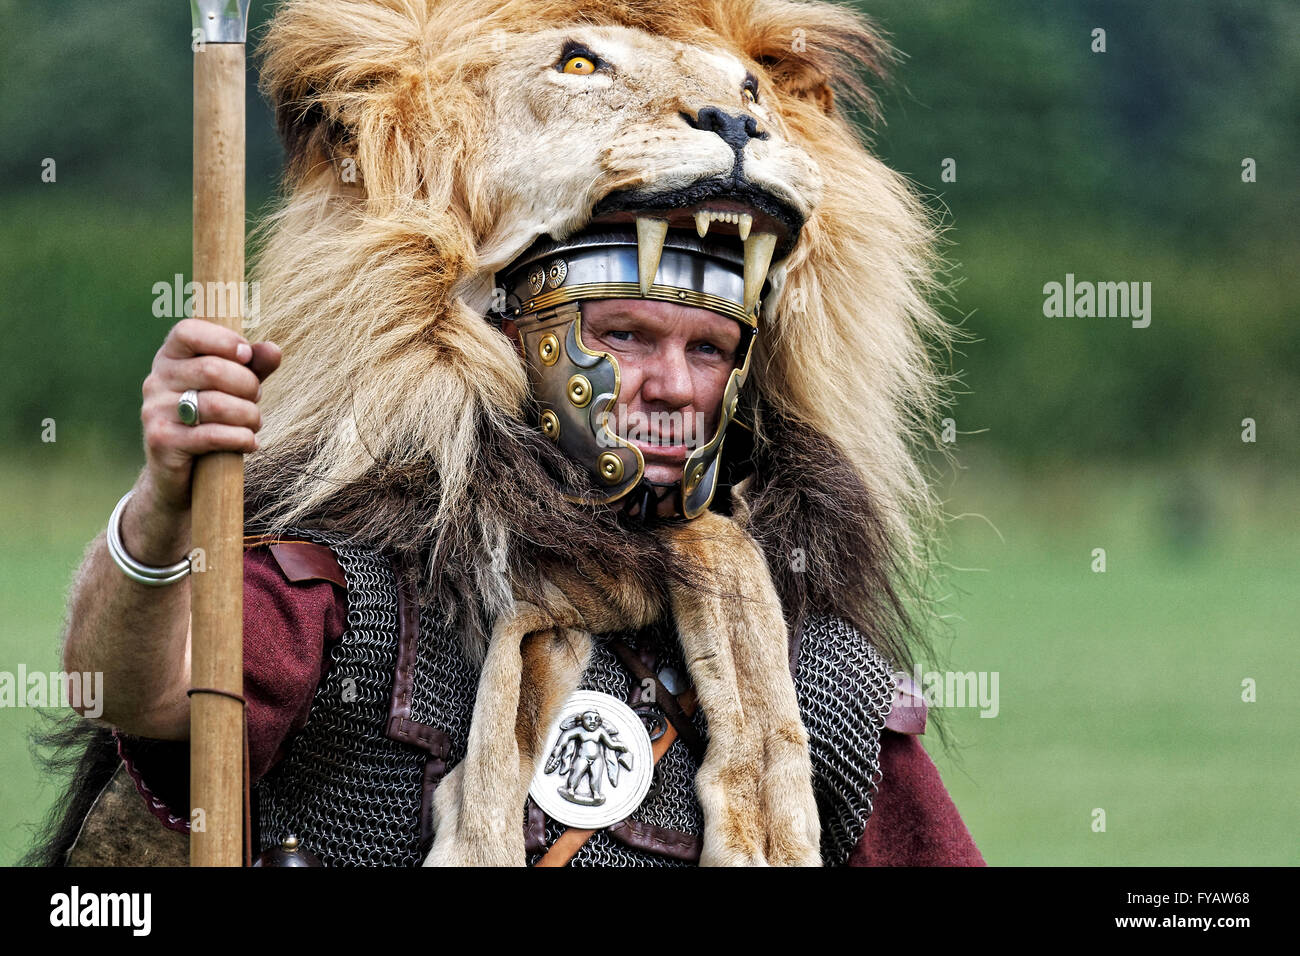 roman-legionary-standard-bearer-aqualifer-first-legion-wearing-lion-FYAW68.jpg